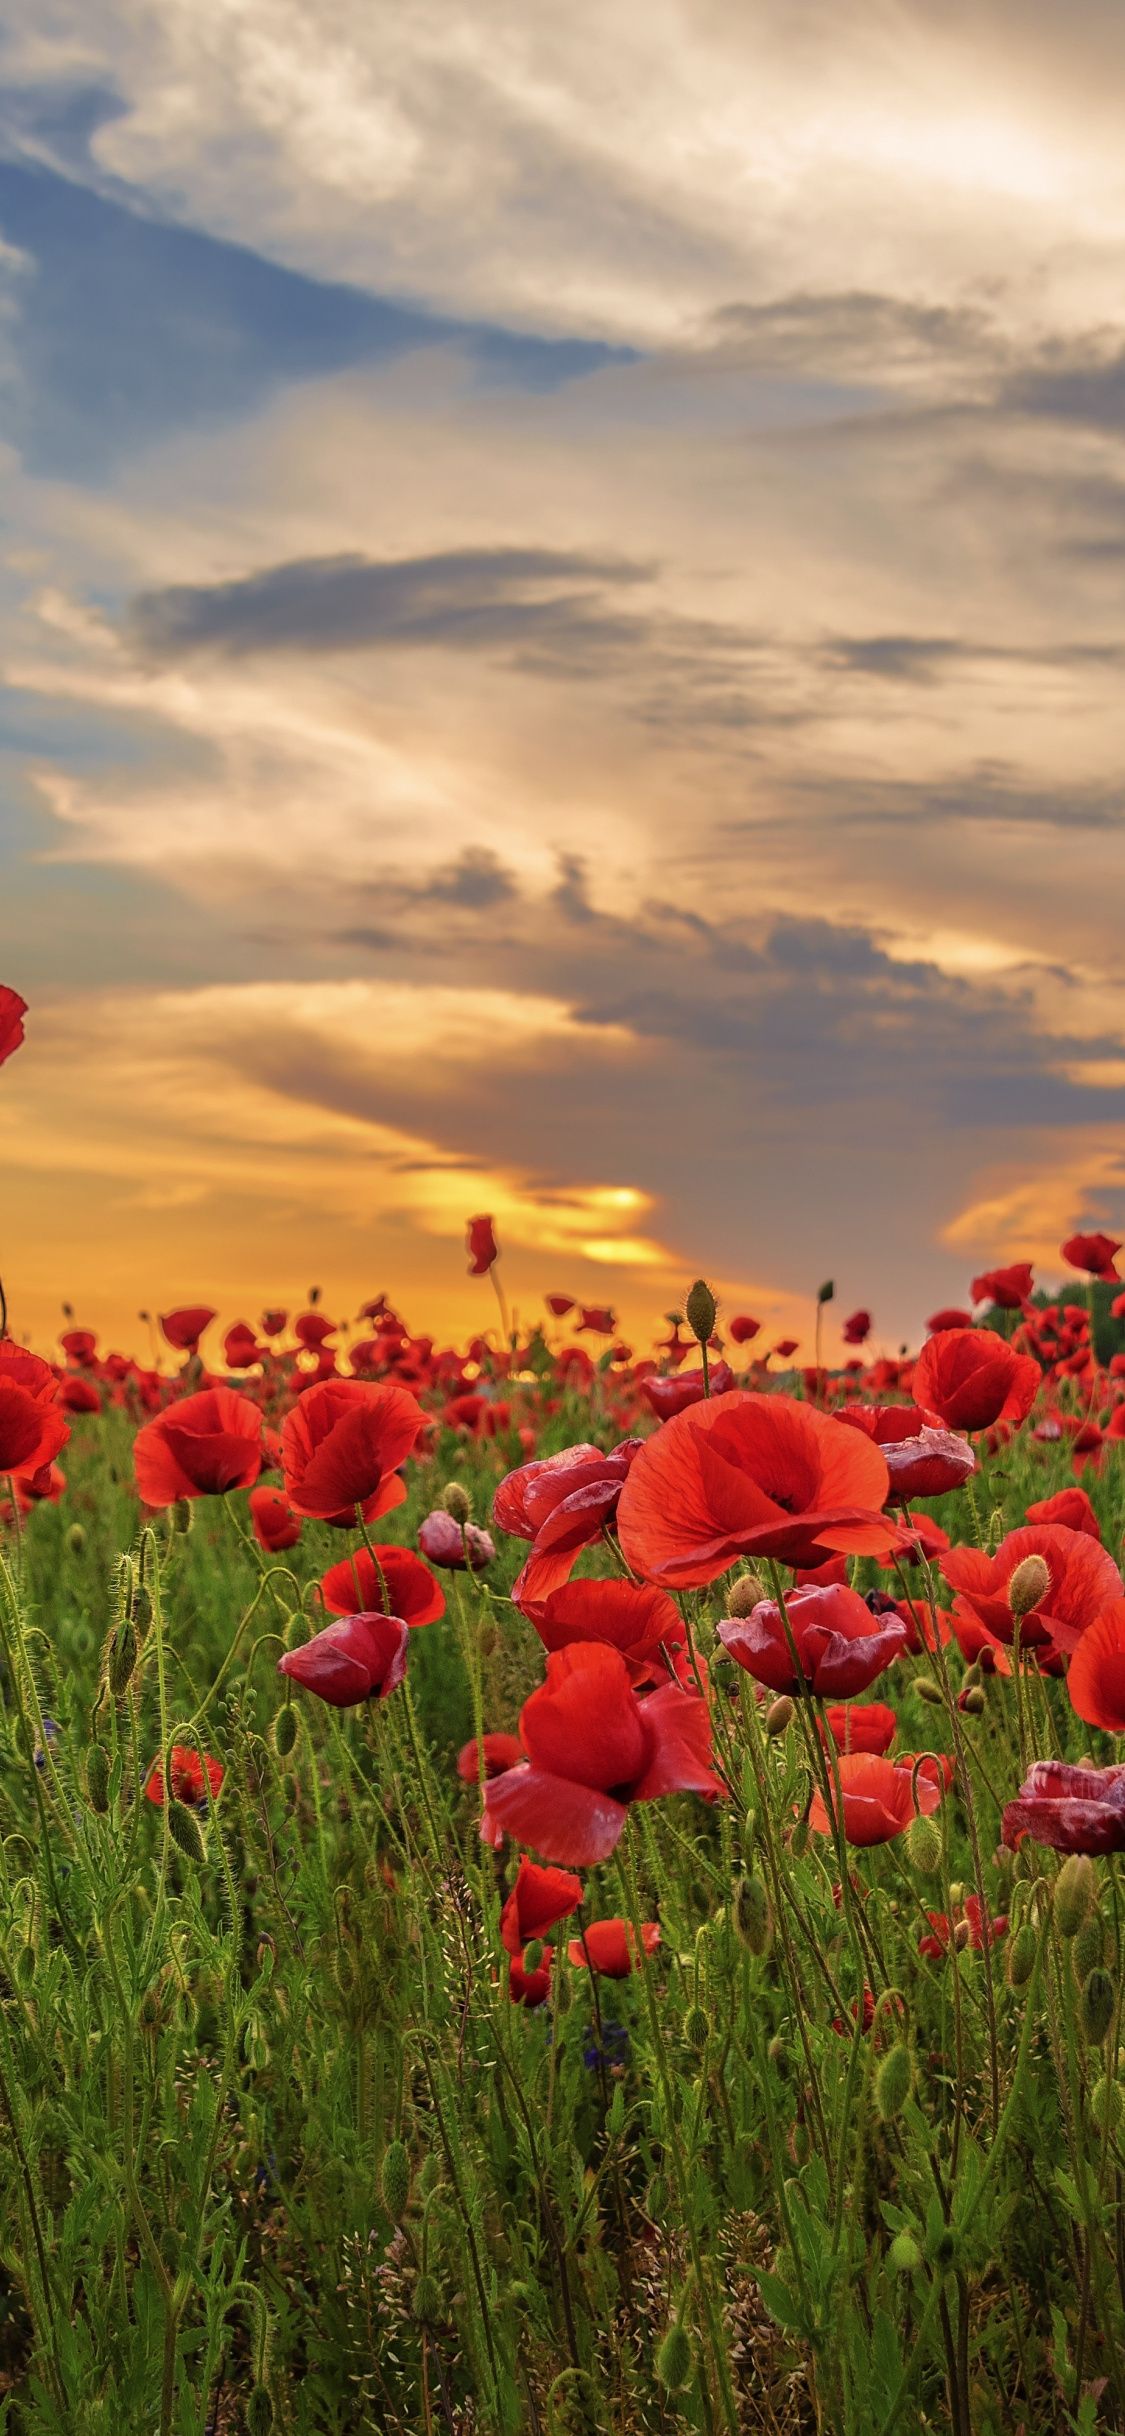 Download 1125x2436 wallpaper sunset, poppy, field, flowers, red